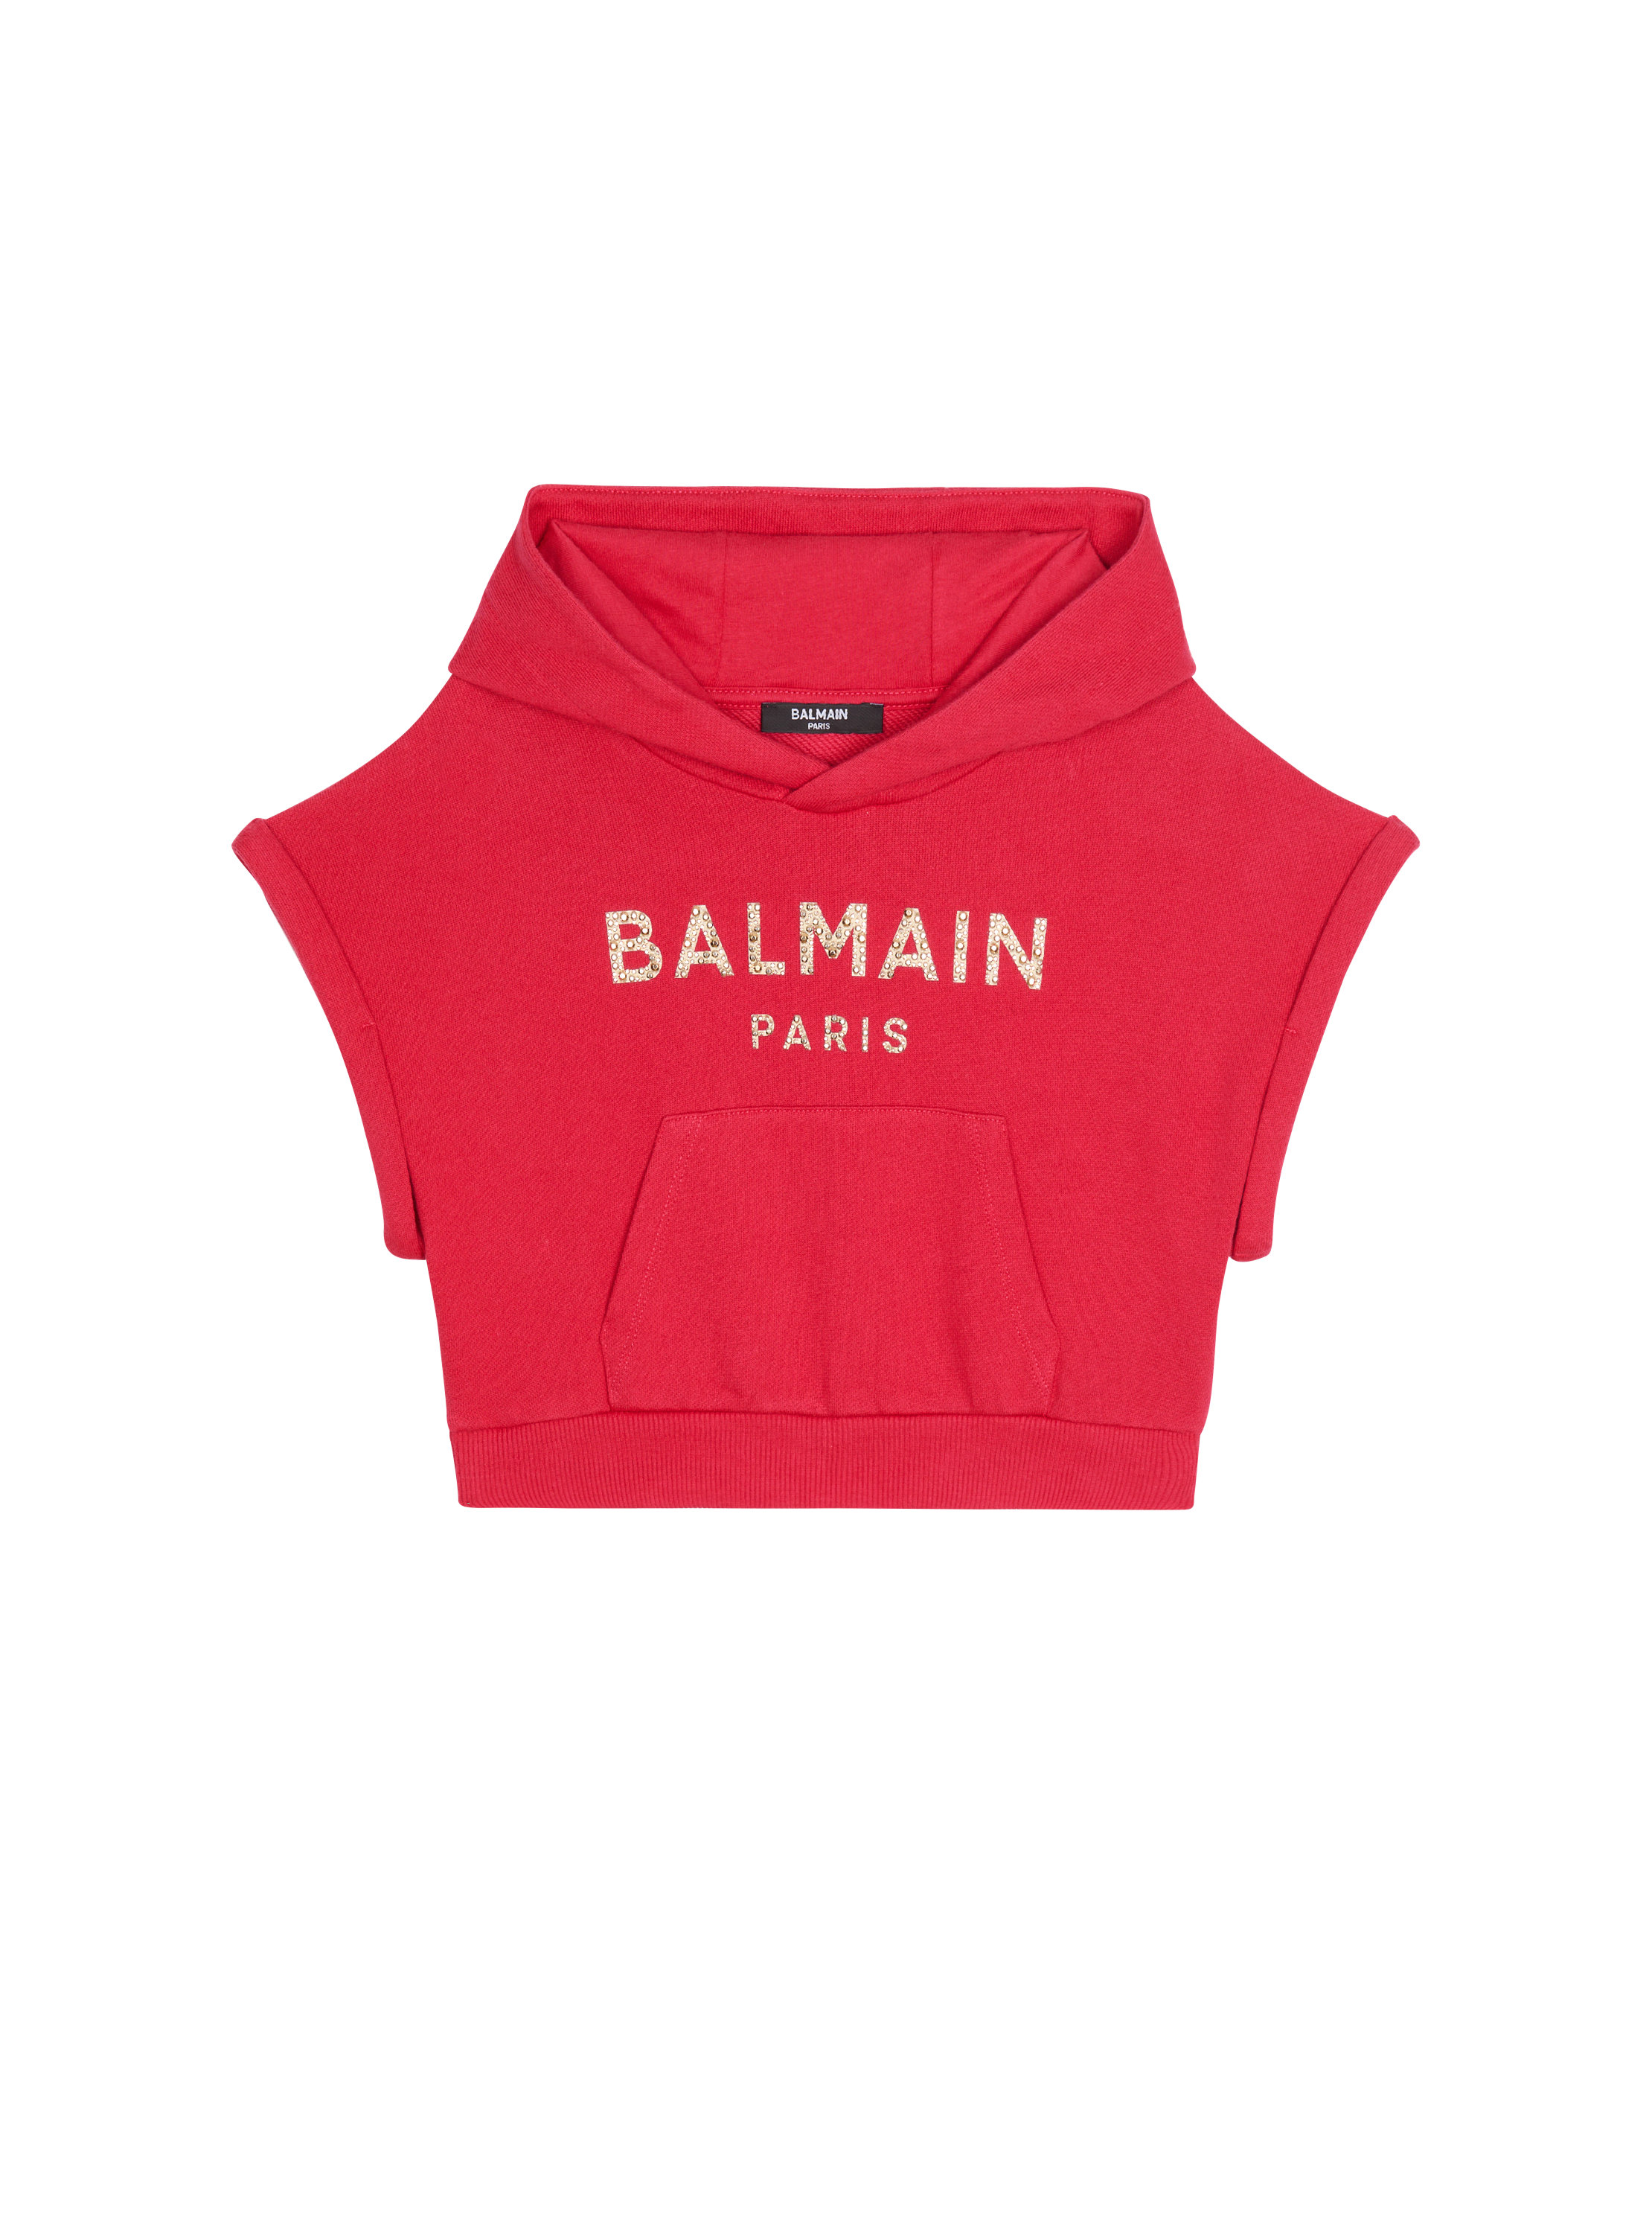 Balmain logo sweatshirt